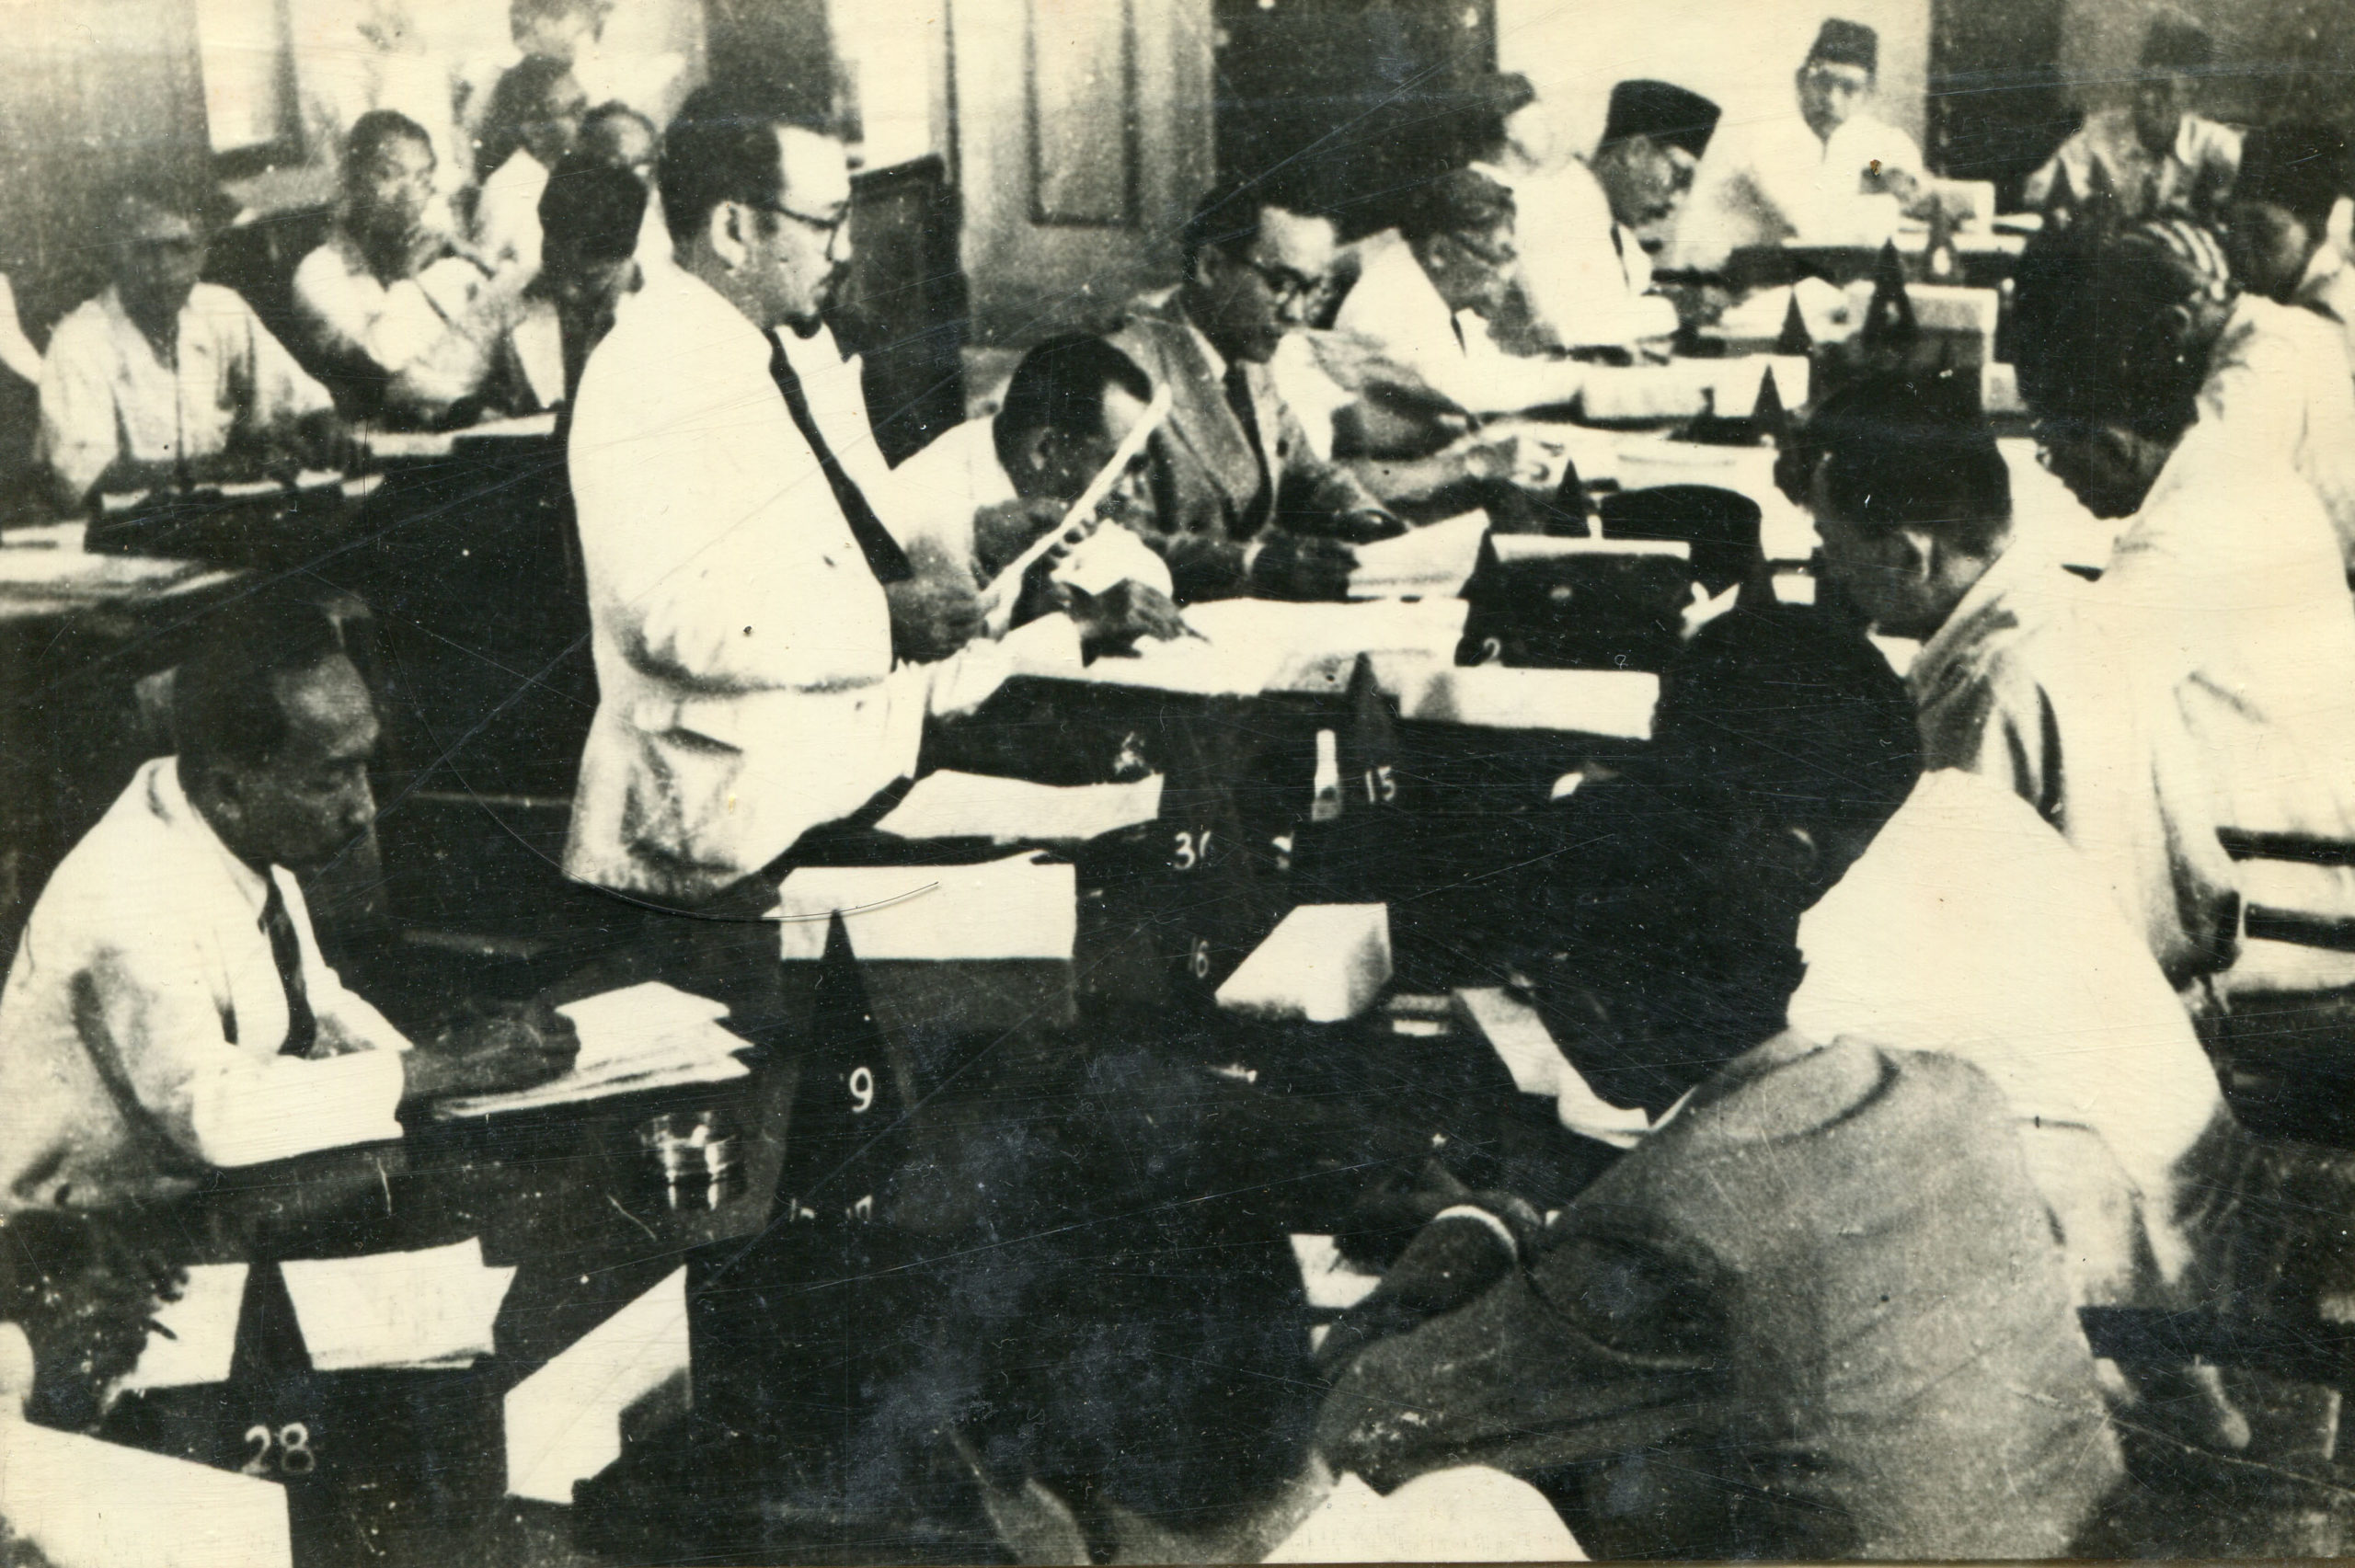 Setelah proklamasi kemerdekaan indonesia ppki mengesahkan undang-undang dasar negara republik indonesia tahun 1945 sebagai